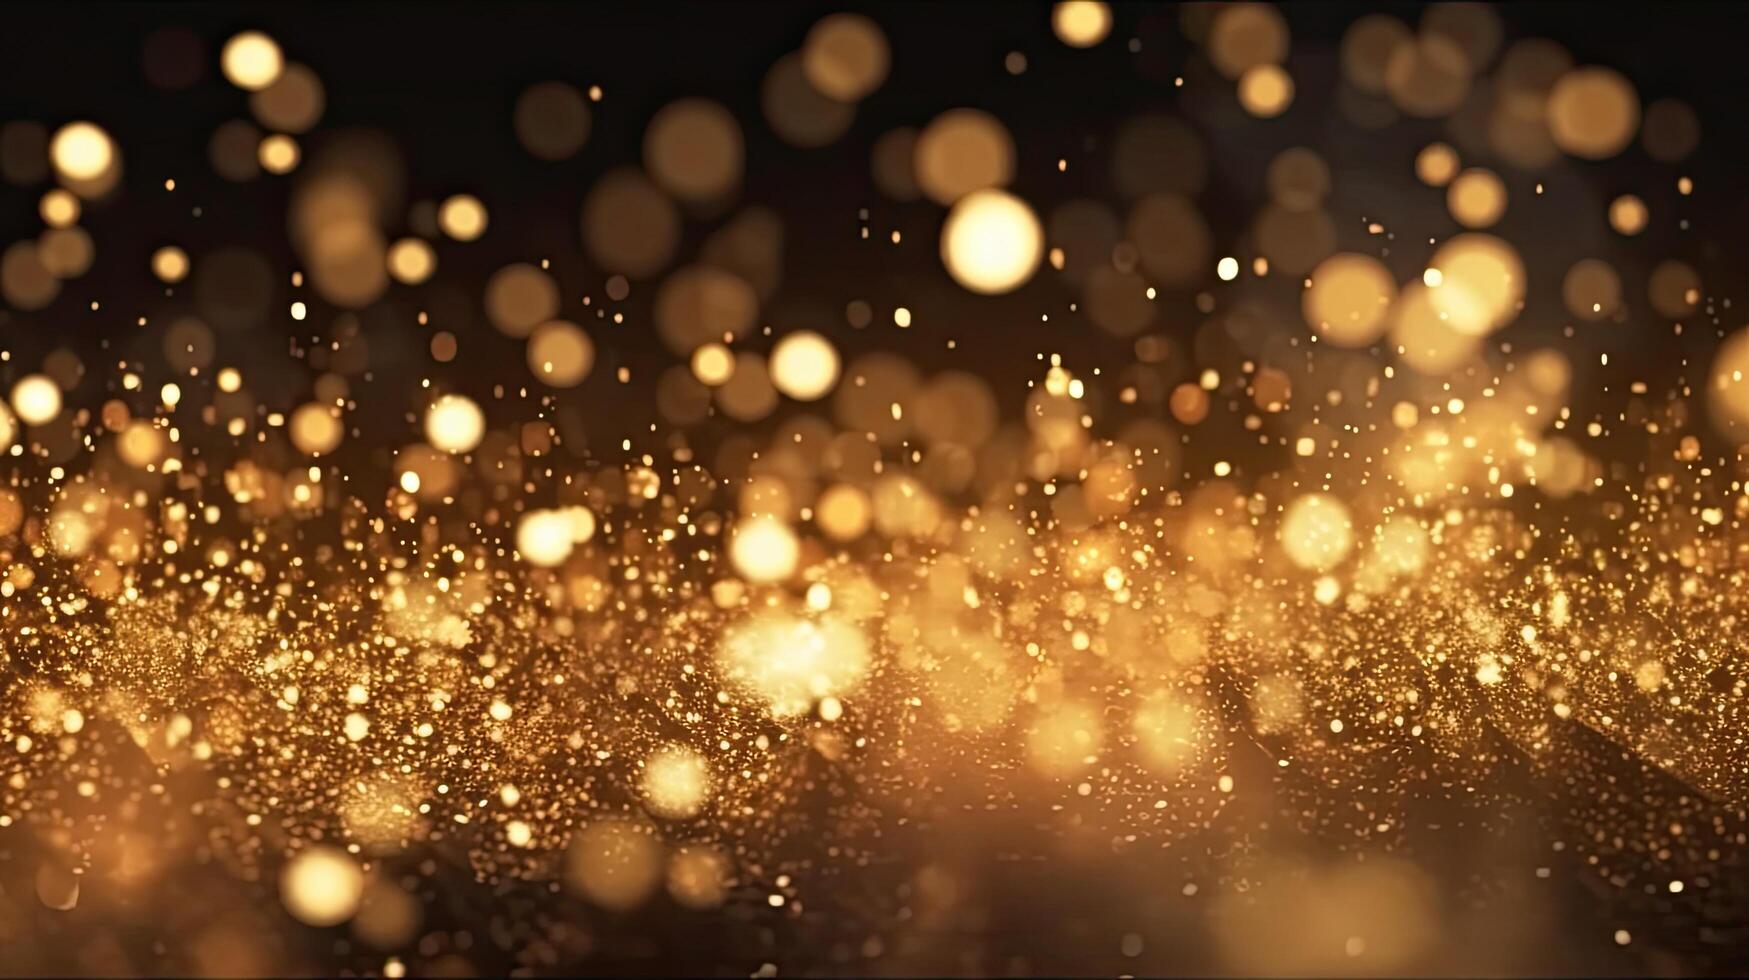 Luxury golden confetti background. Illustration photo